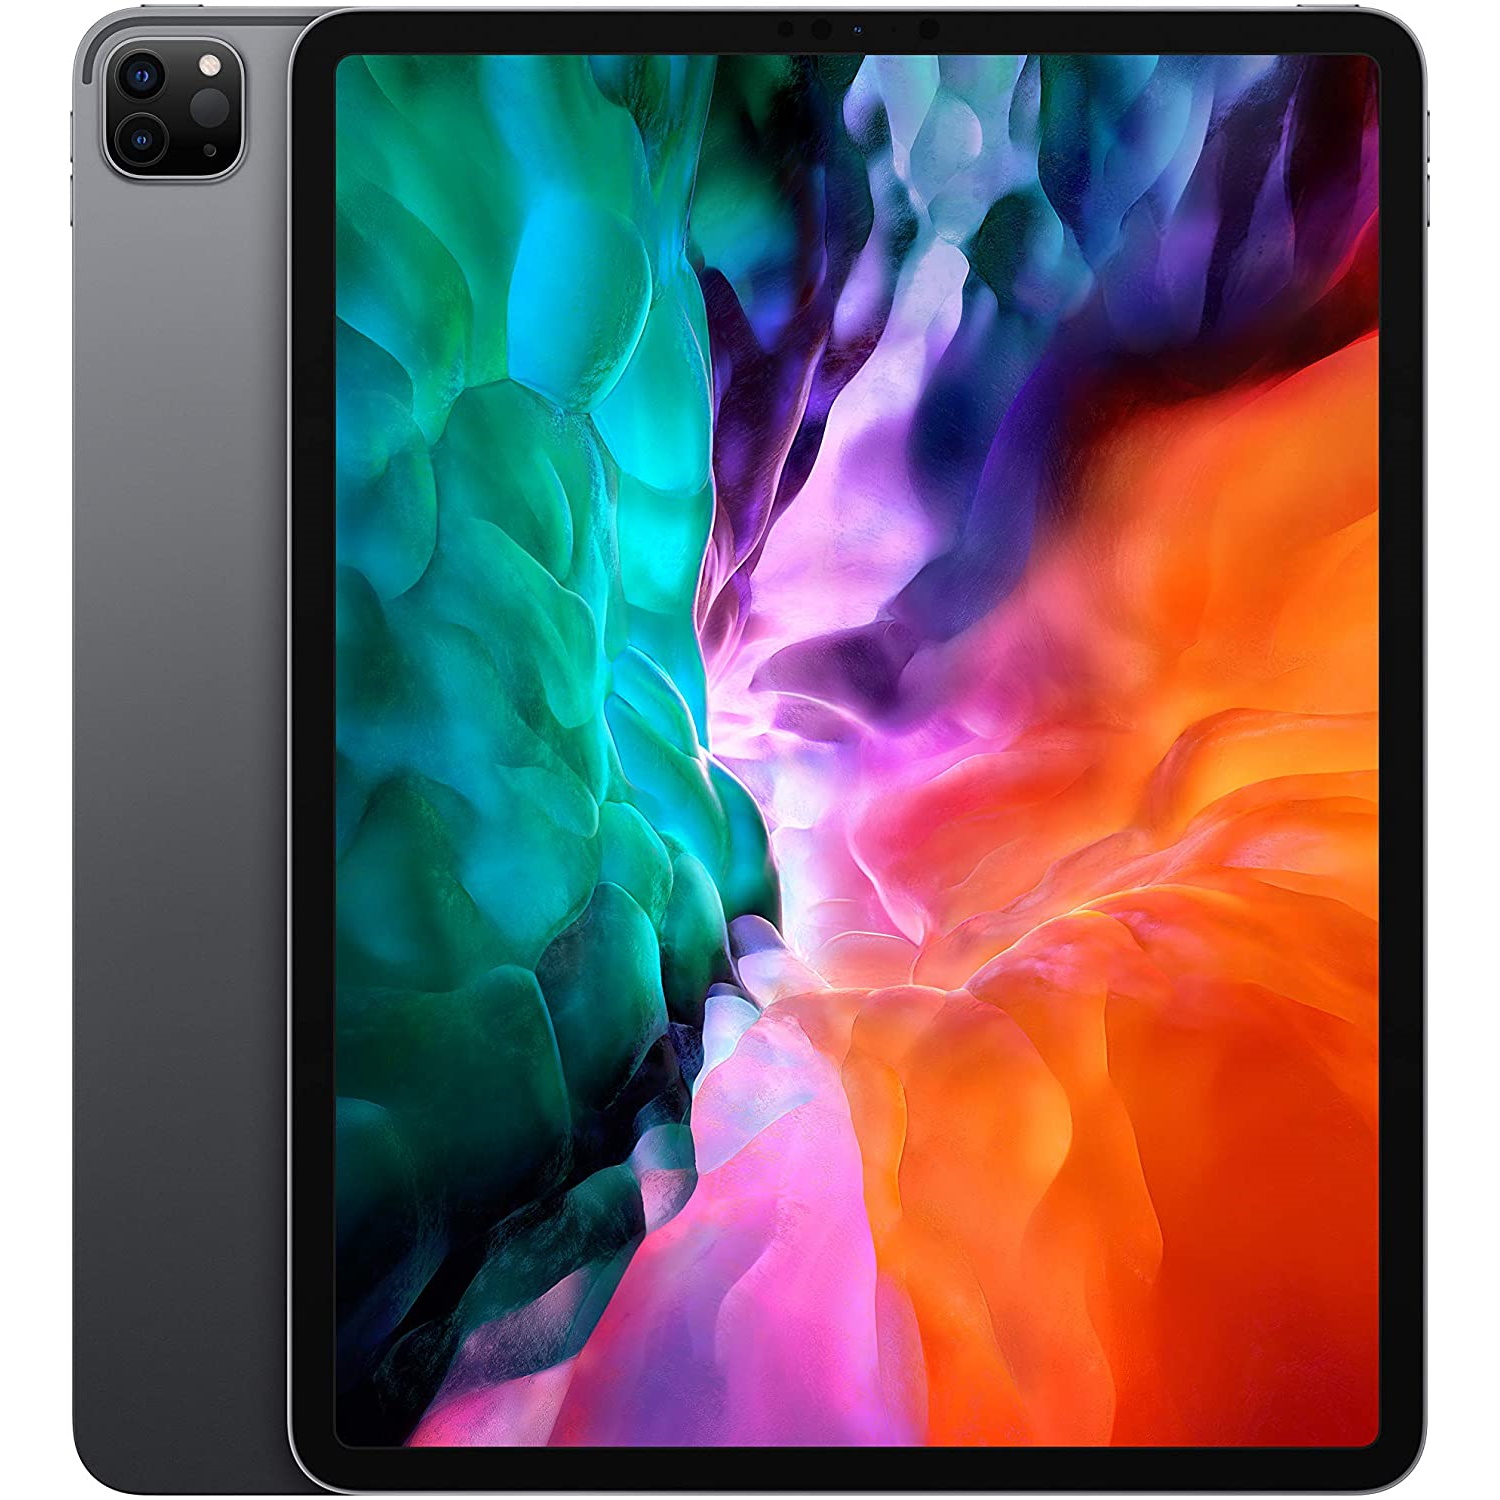 The latest model Apple iPad in 2021 3